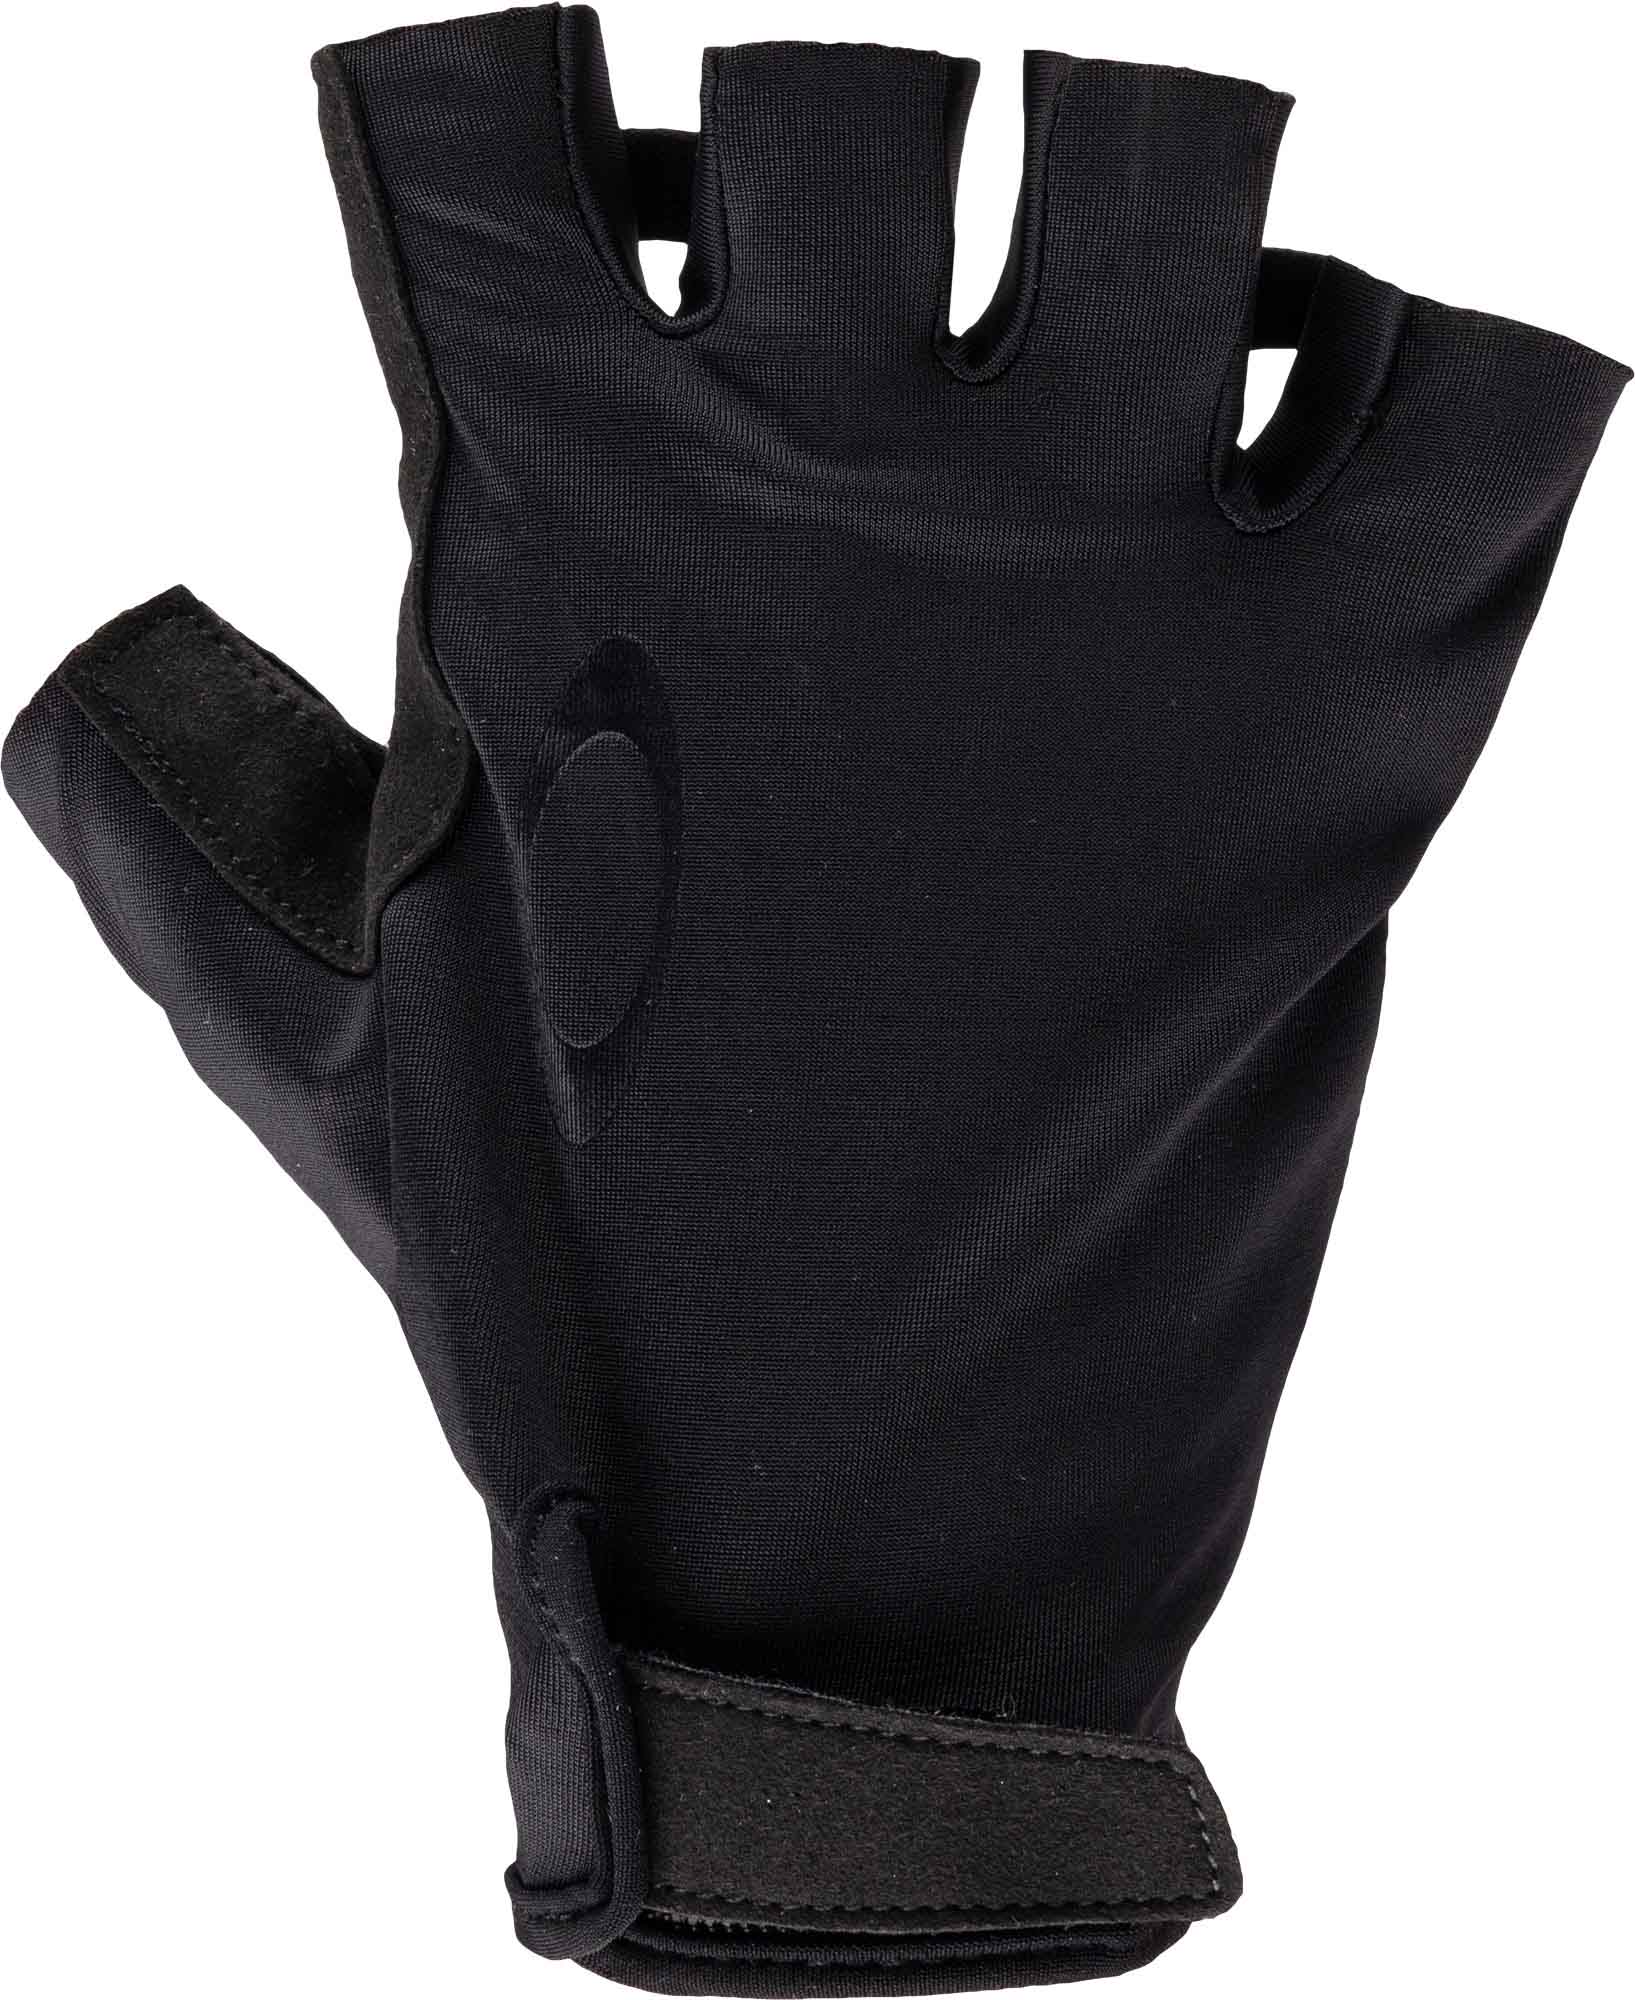 Cyclist gloves